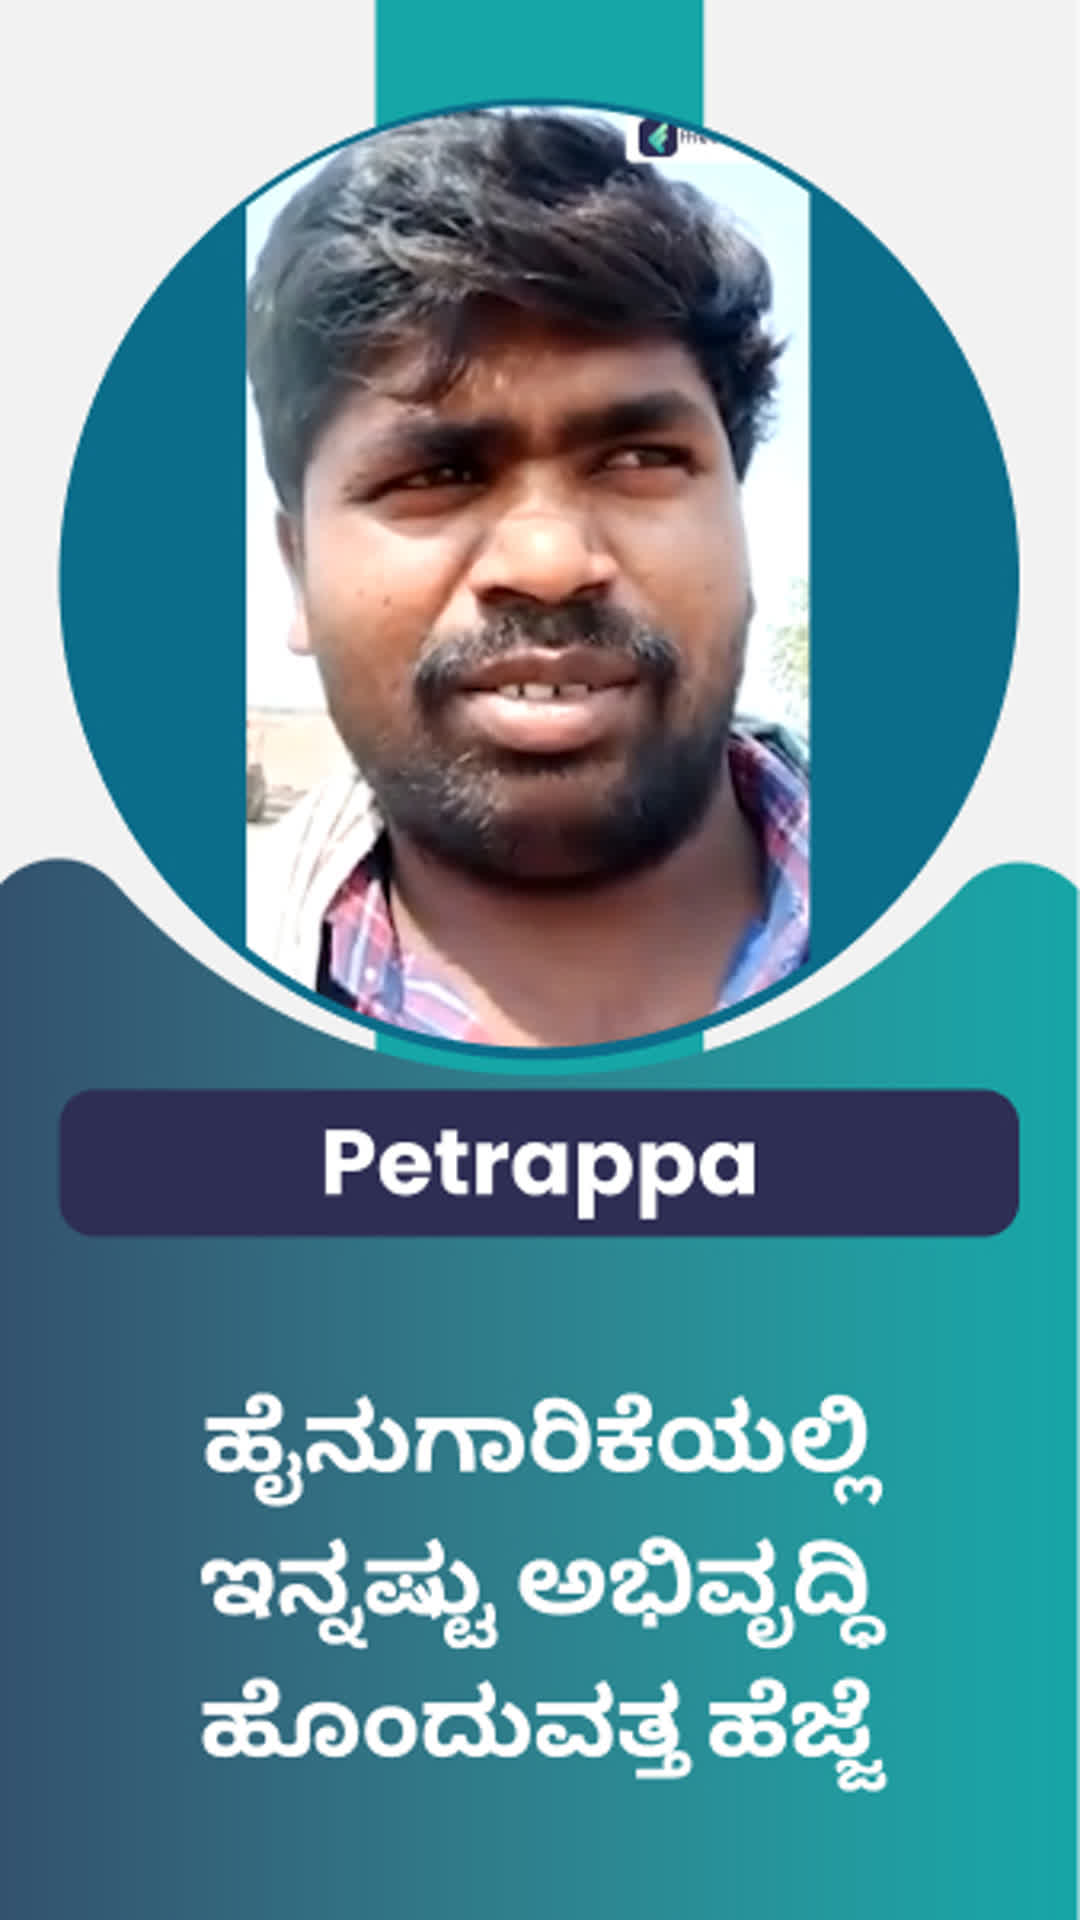 B Petrappa's Honest Review of ffreedom app - Raichur ,Karnataka